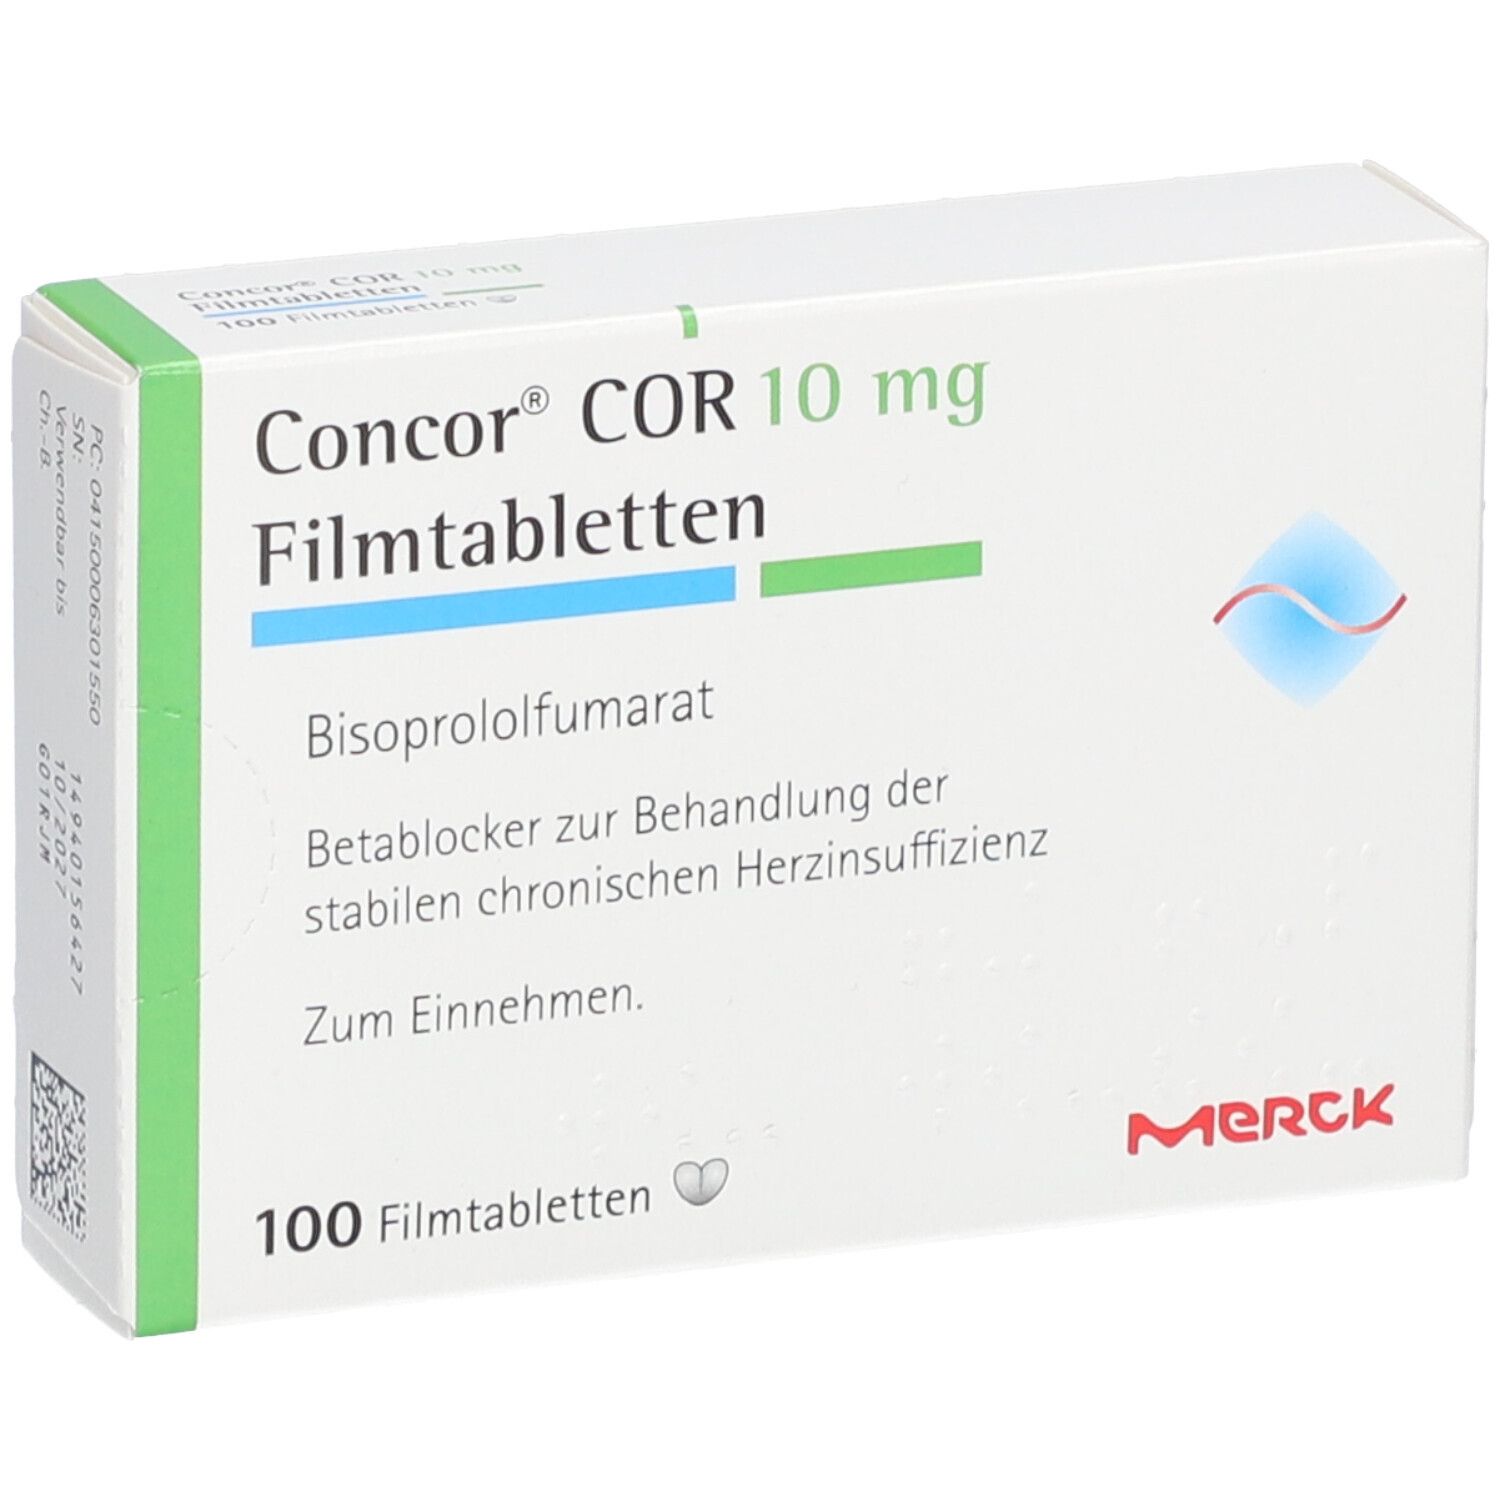 Concor® COR 10 mg